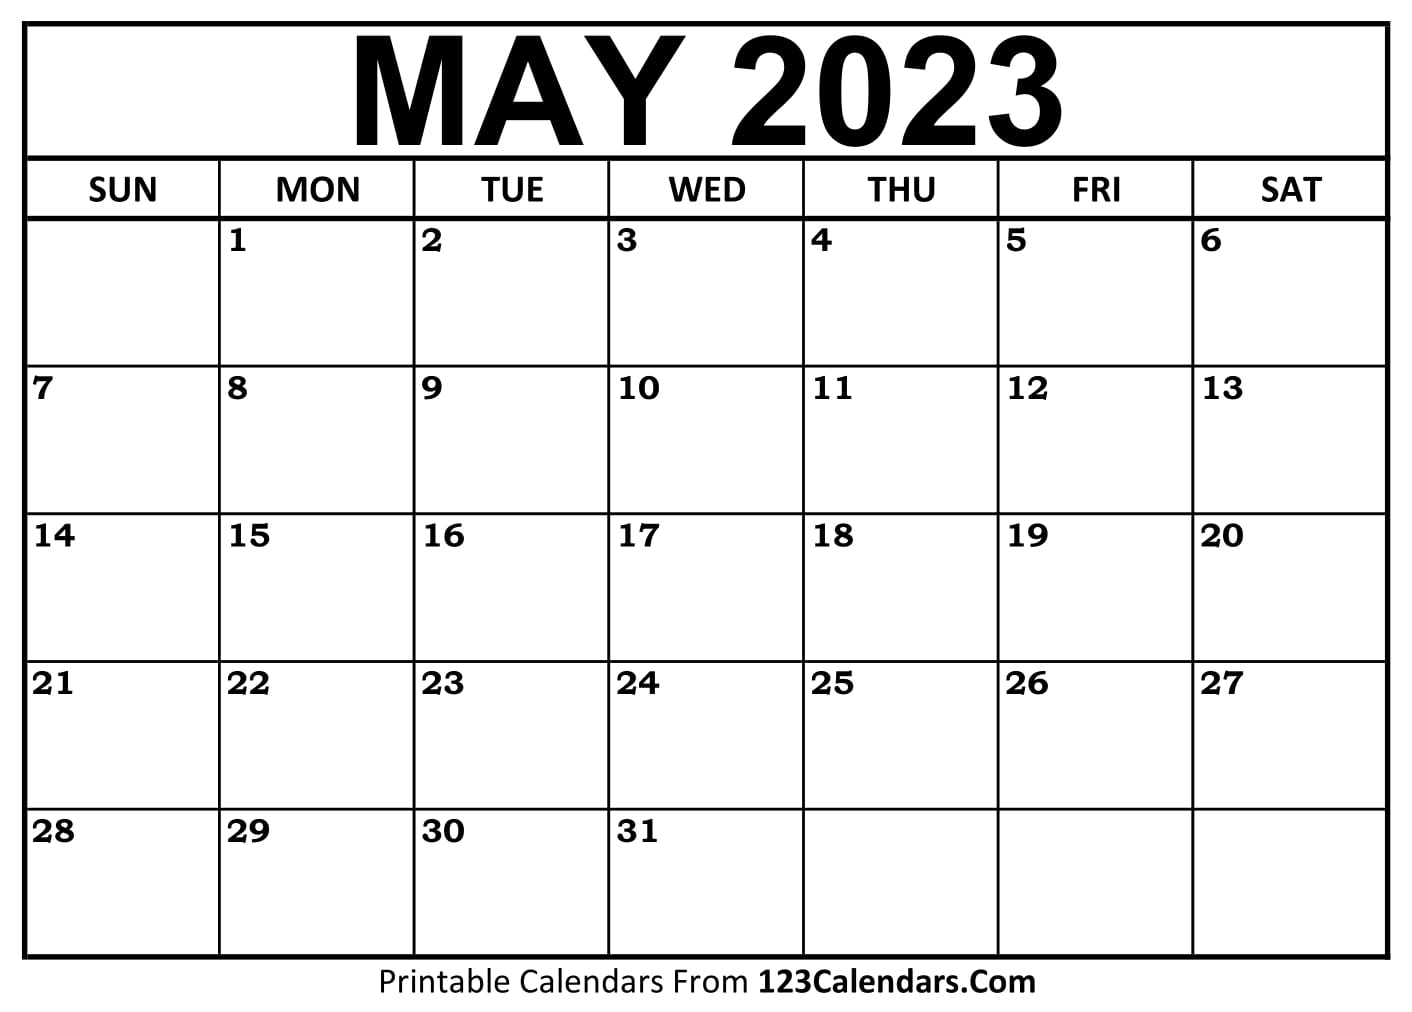 Printable May 2023 Calendar Templates - 123Calendars.com